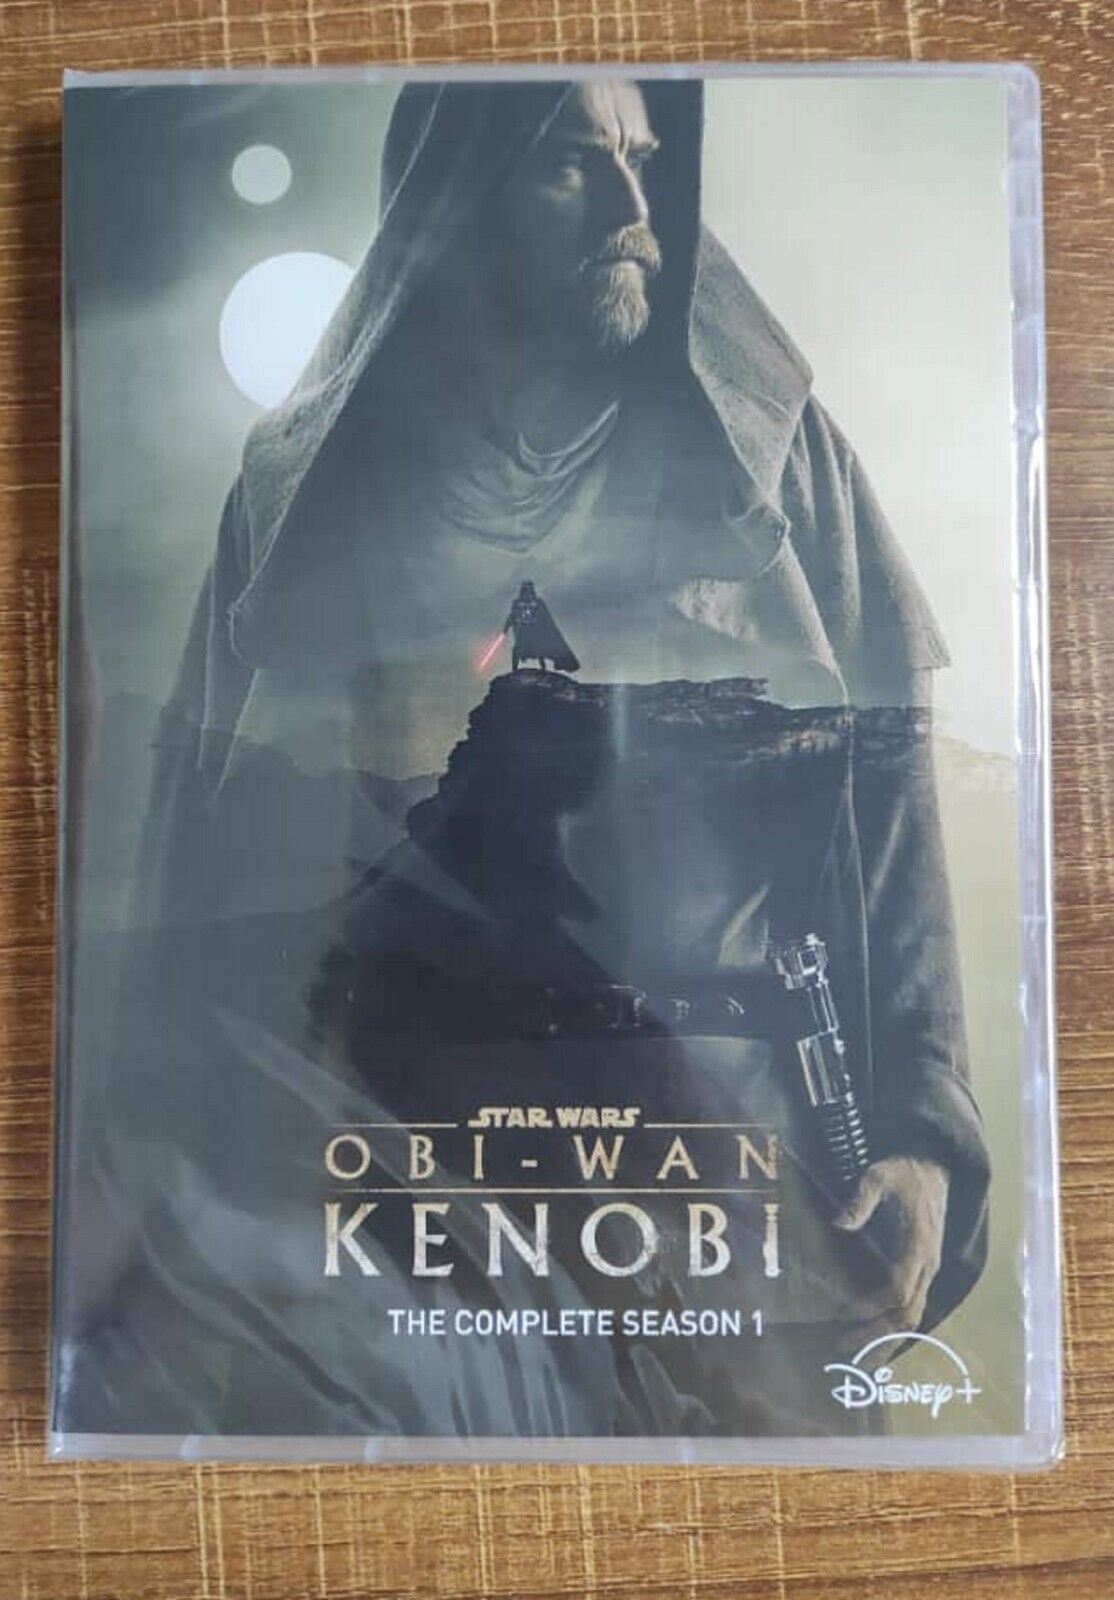 Obi-wan kenobi: The Complete Series,Season 1(DVD) Brand New / Fast Shipping